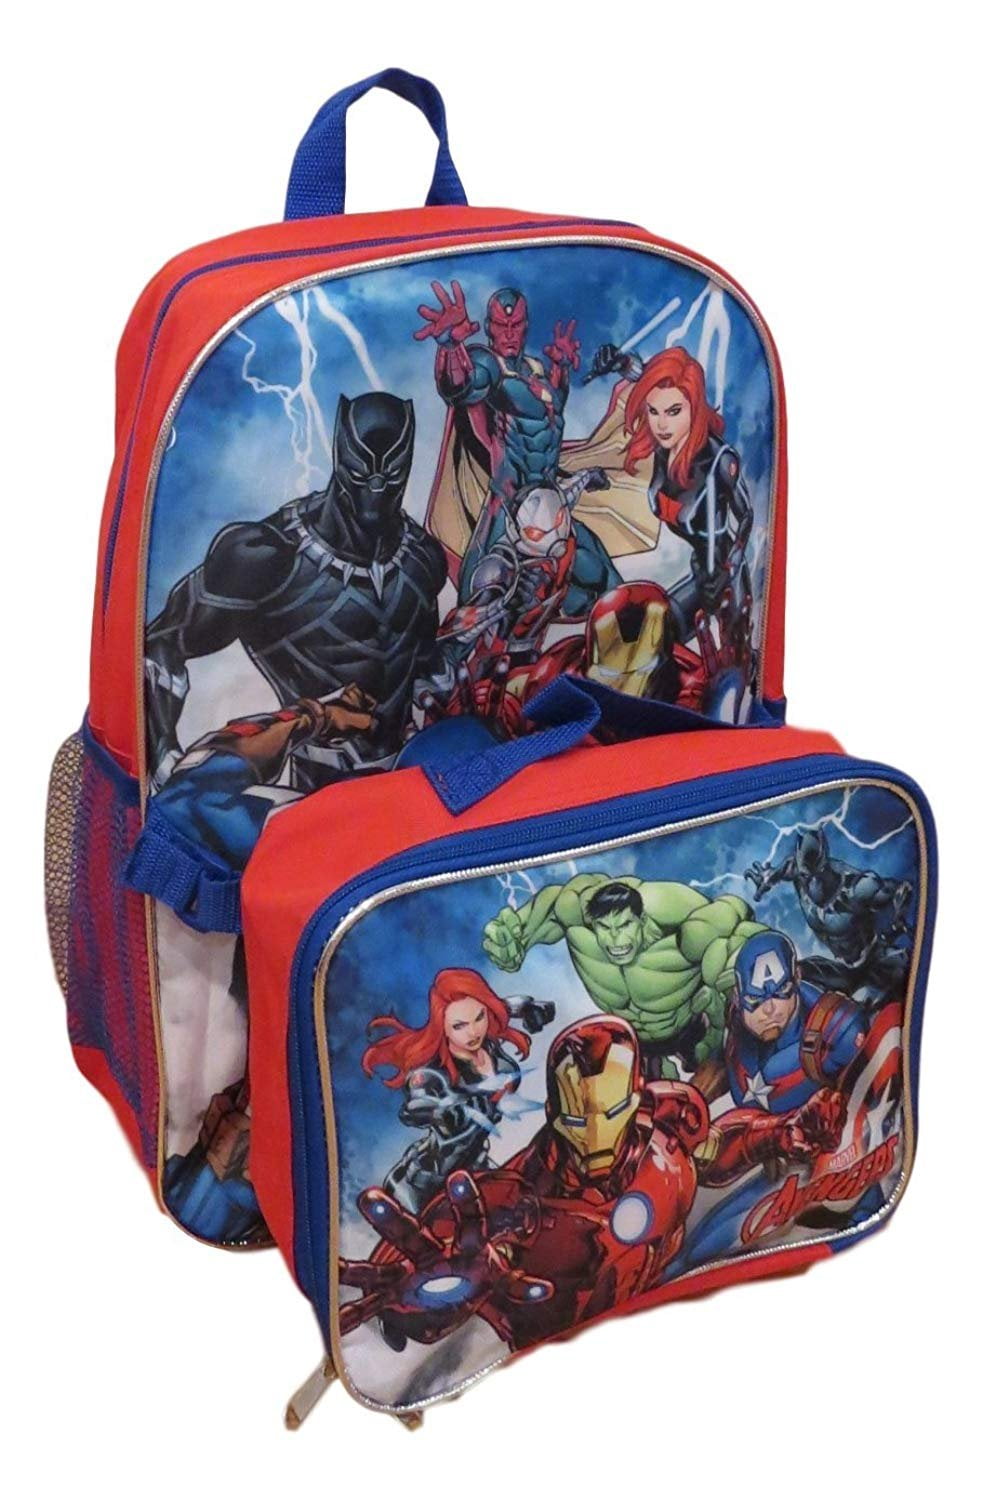 Carry-On Lunch-Bag & Pencil Case Details about   Marvel Comics Avengers Assemble Boy's Backpack 